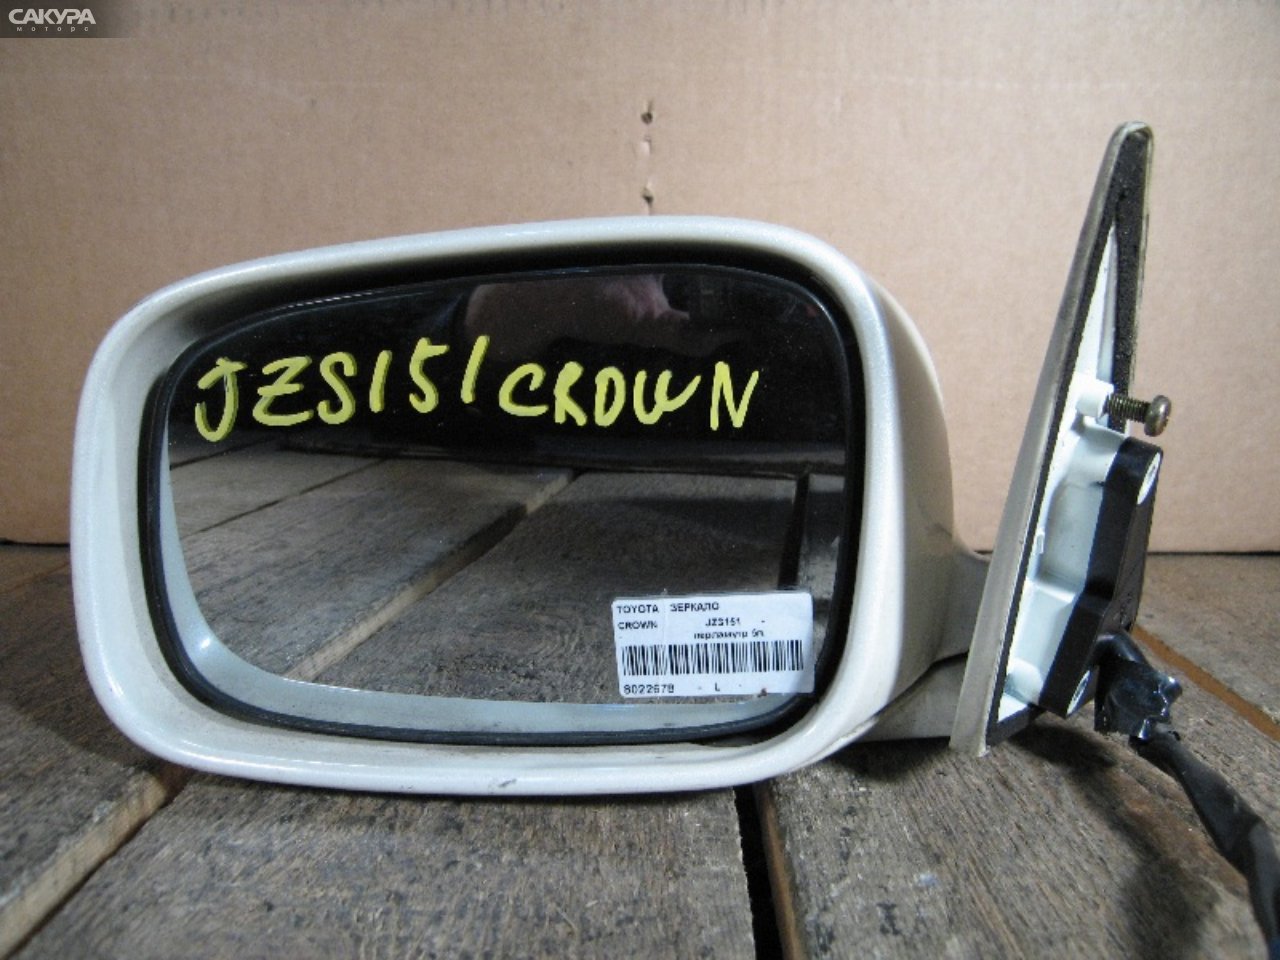 Зеркало боковое левое Toyota Crown JZS151: купить в Сакура Абакан.